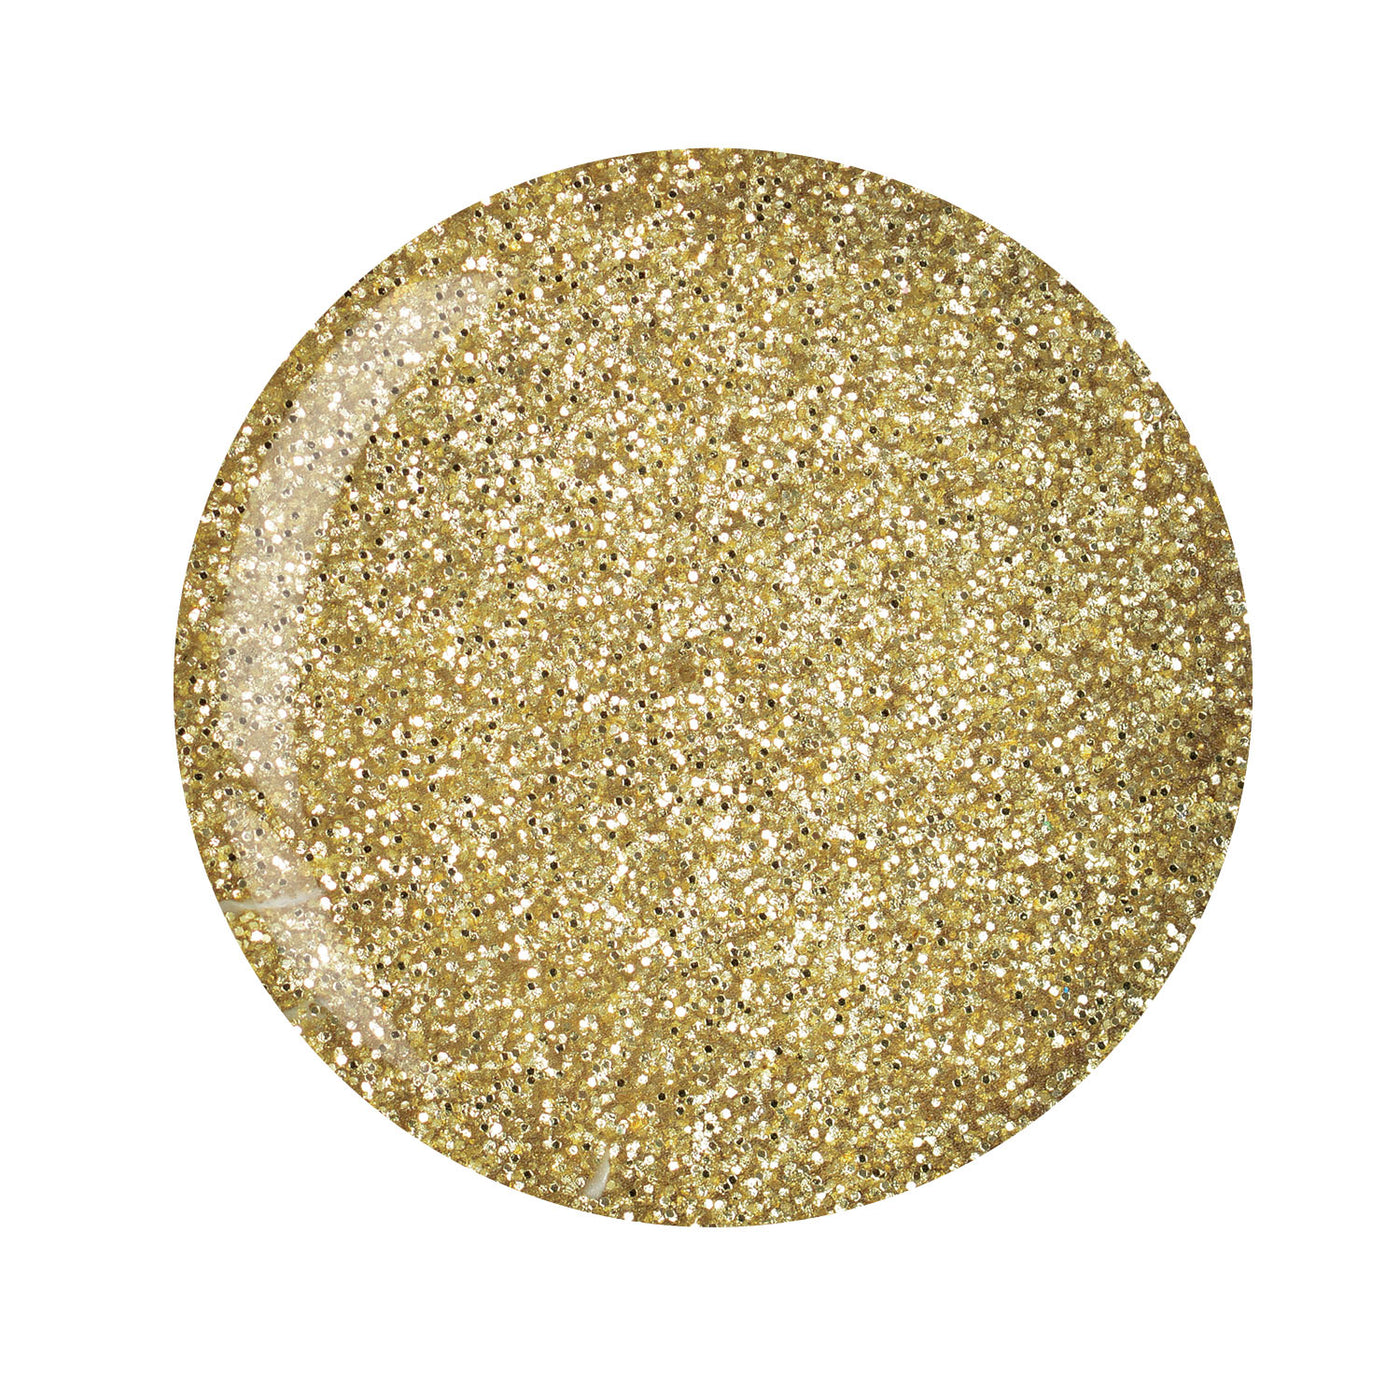 CP Dipping Powder14g - 5558-5 Rich Gold Glitter